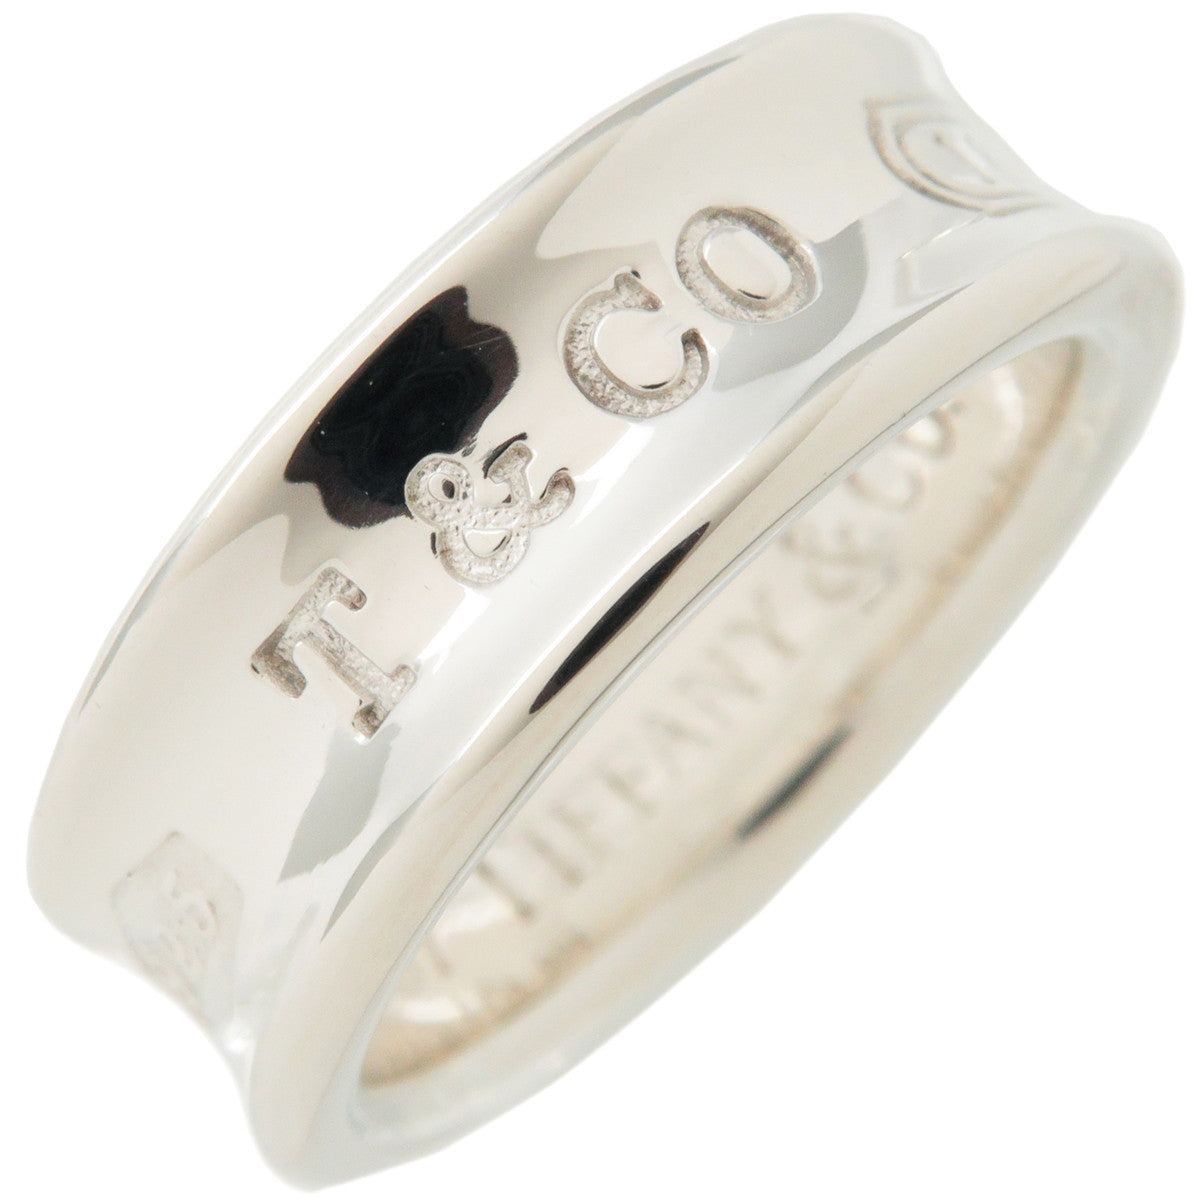 Tiffany&Co.-1837-Ring-SV925-Silver-#12-US6-HK13-EU52.5